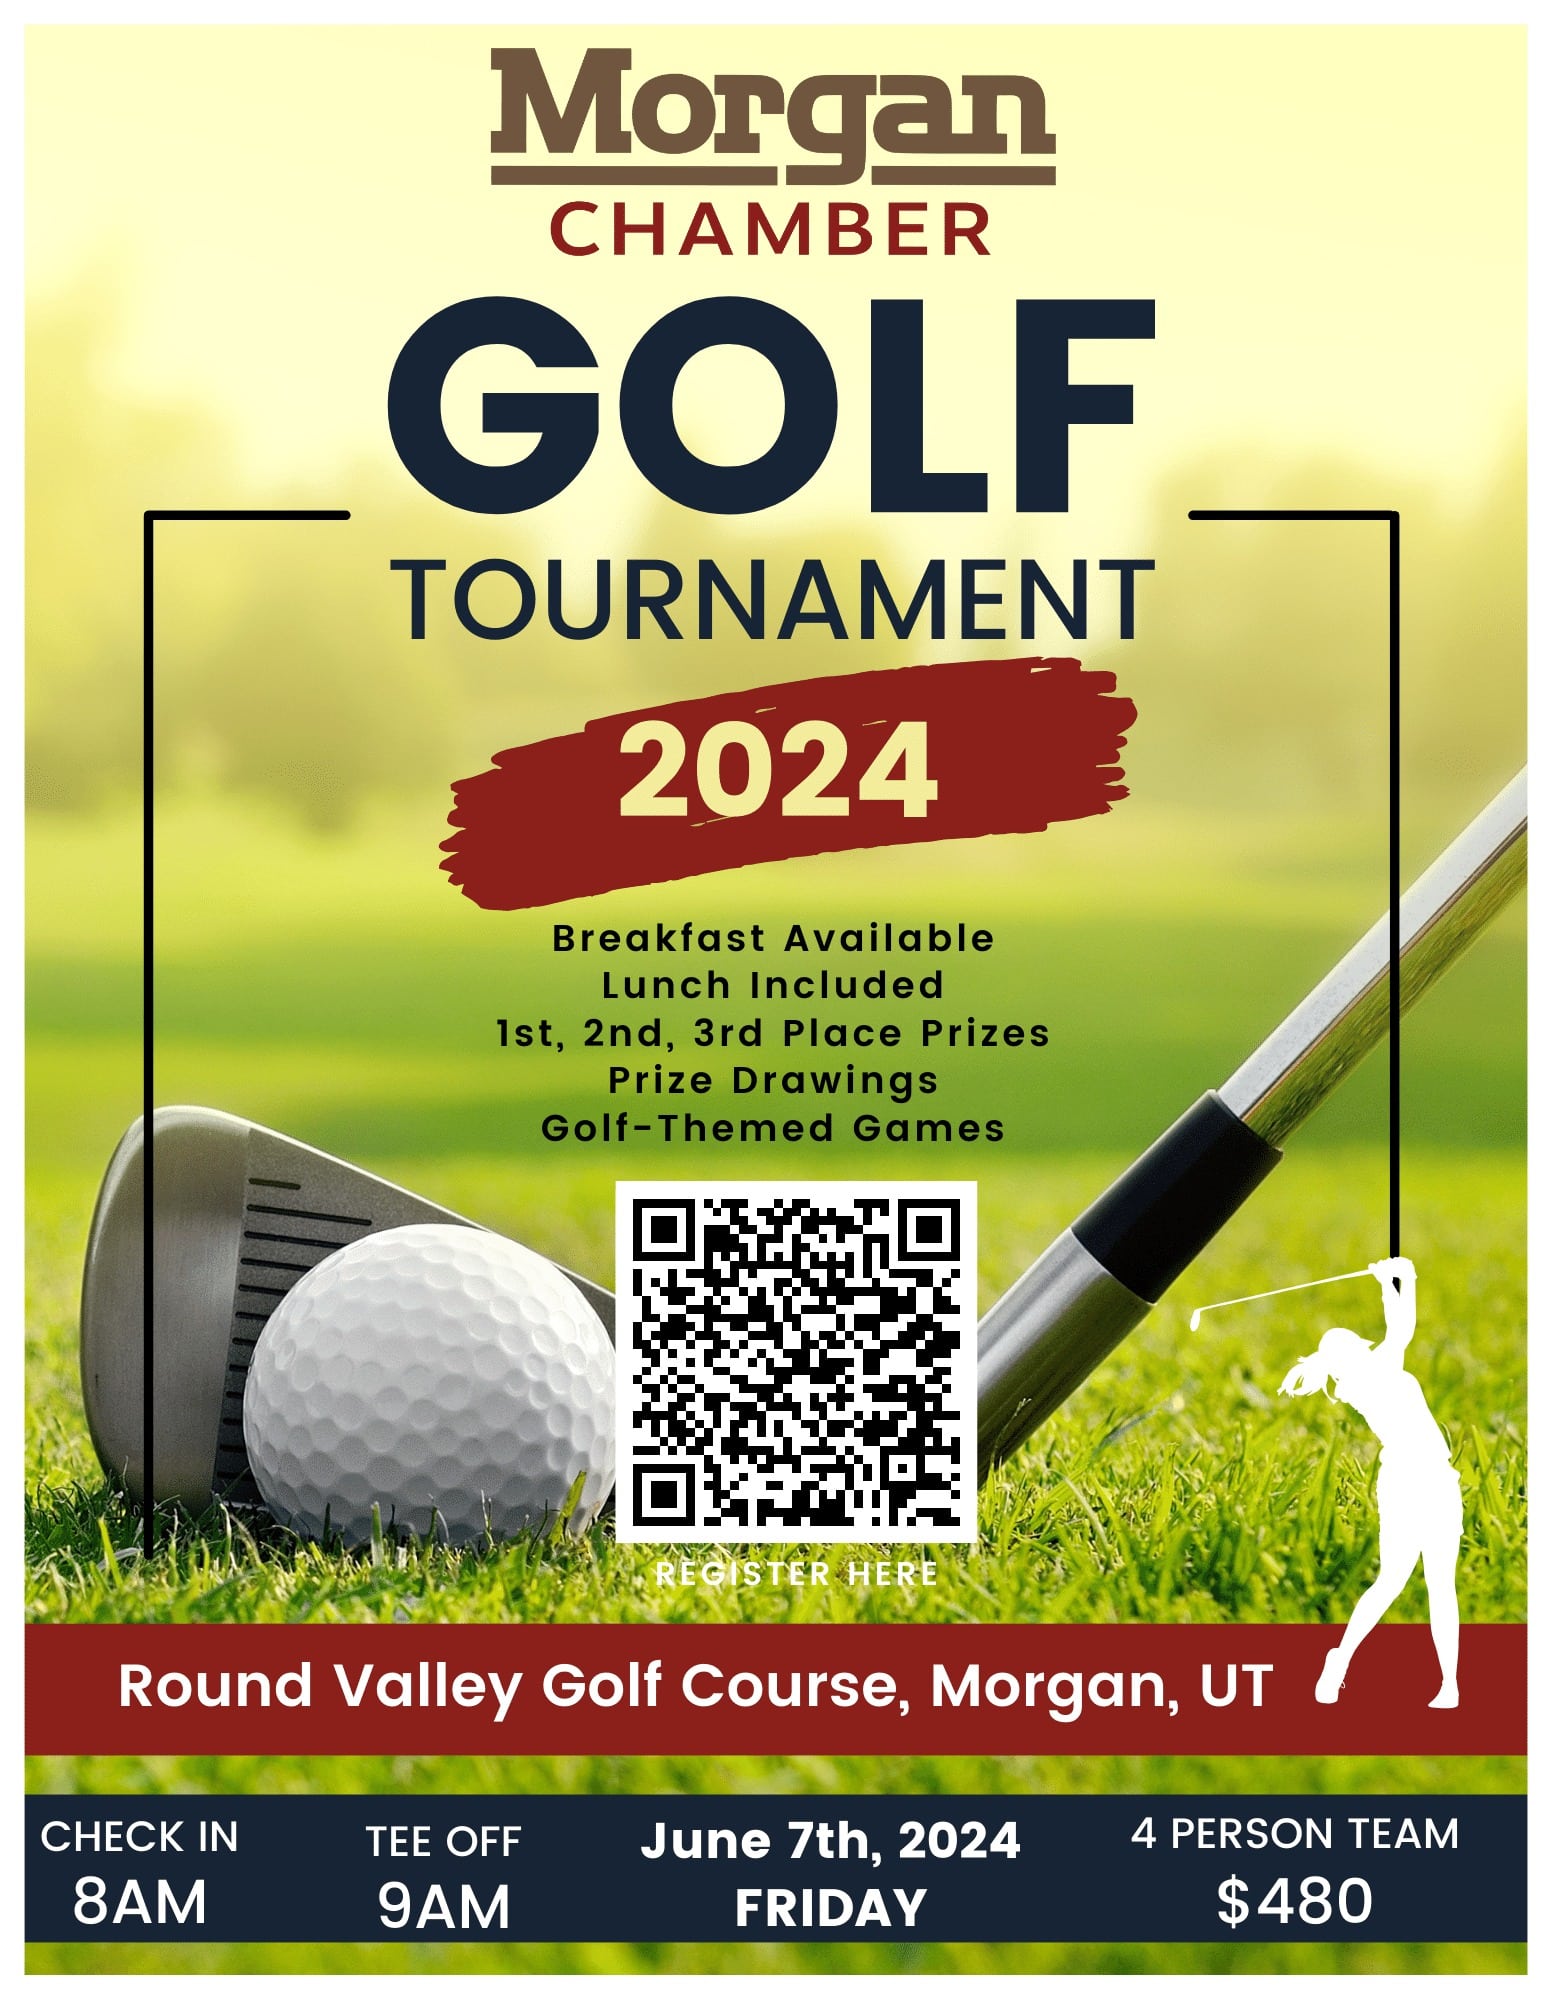 Morgan Chamber Golf Tournament 2024 flyer. Round Valley Gold Course, Morgan, UT.